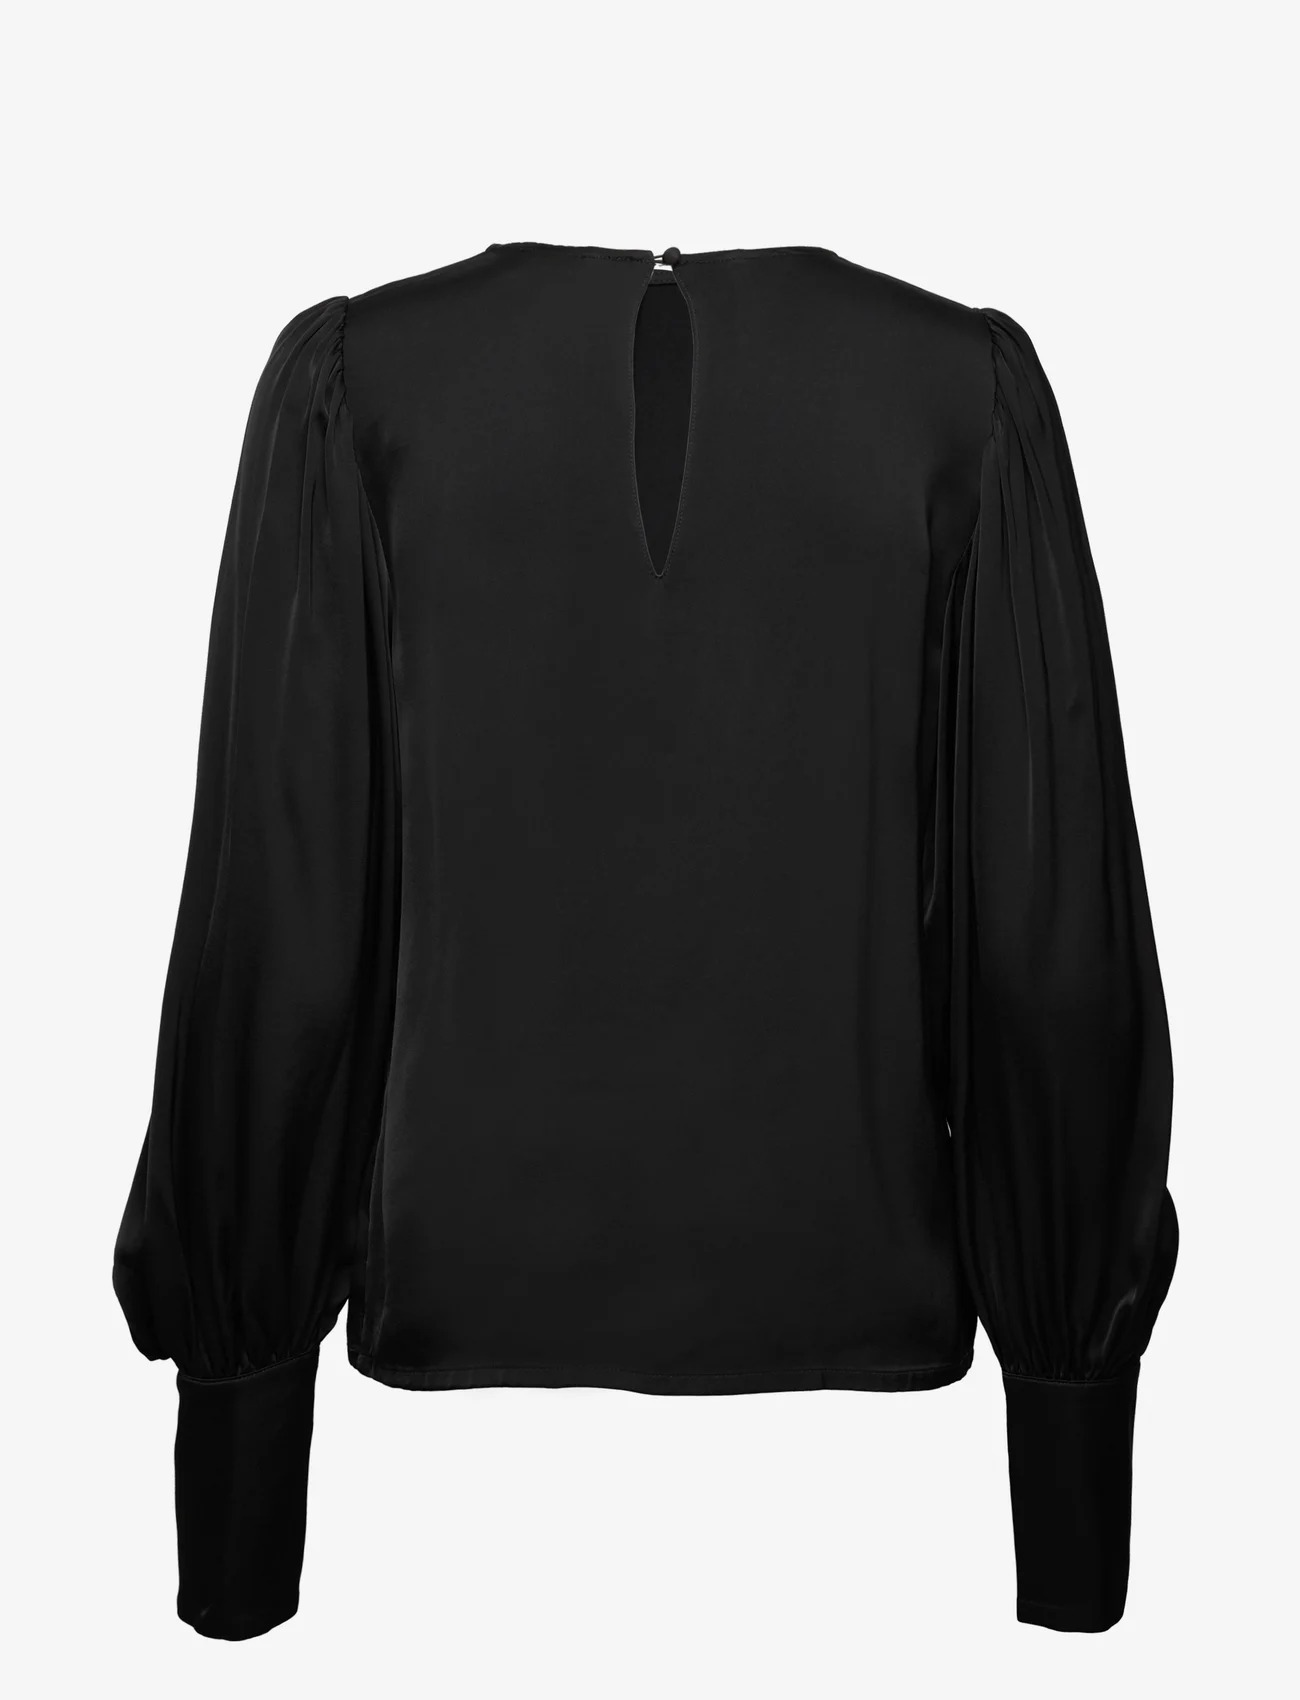 Malina - Rina balloon sleeve blouse - långärmade blusar - black - 1